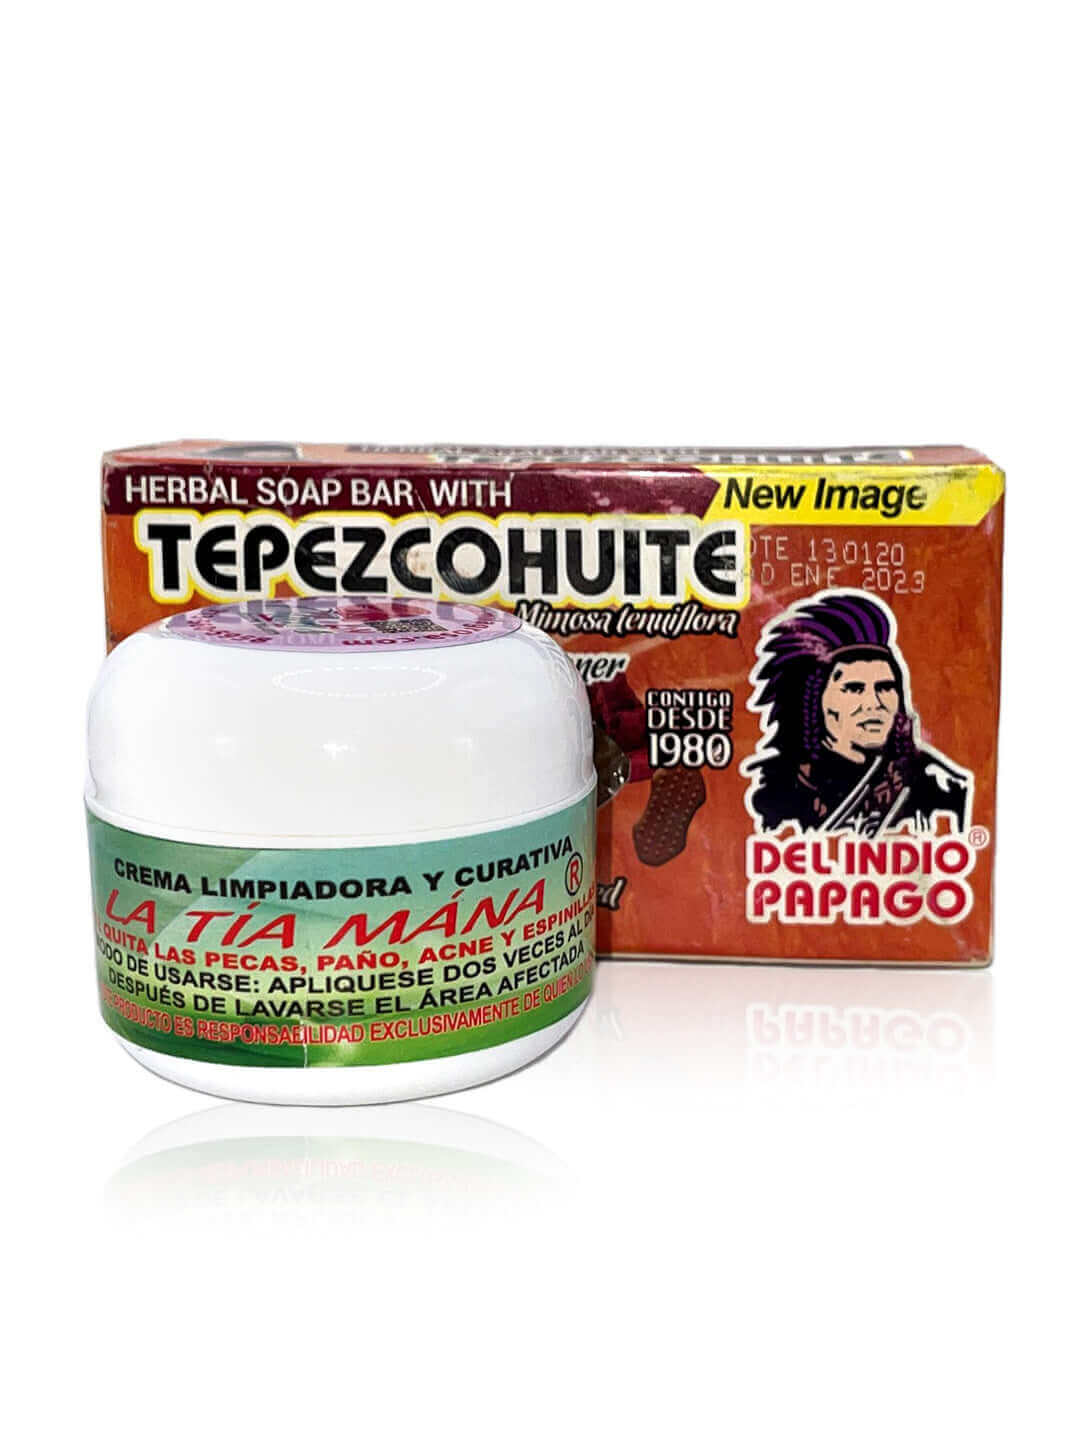 Jabon Neutro Neutral Soap Lirio for Facial Use with Crema la Milagrosa and  Tia